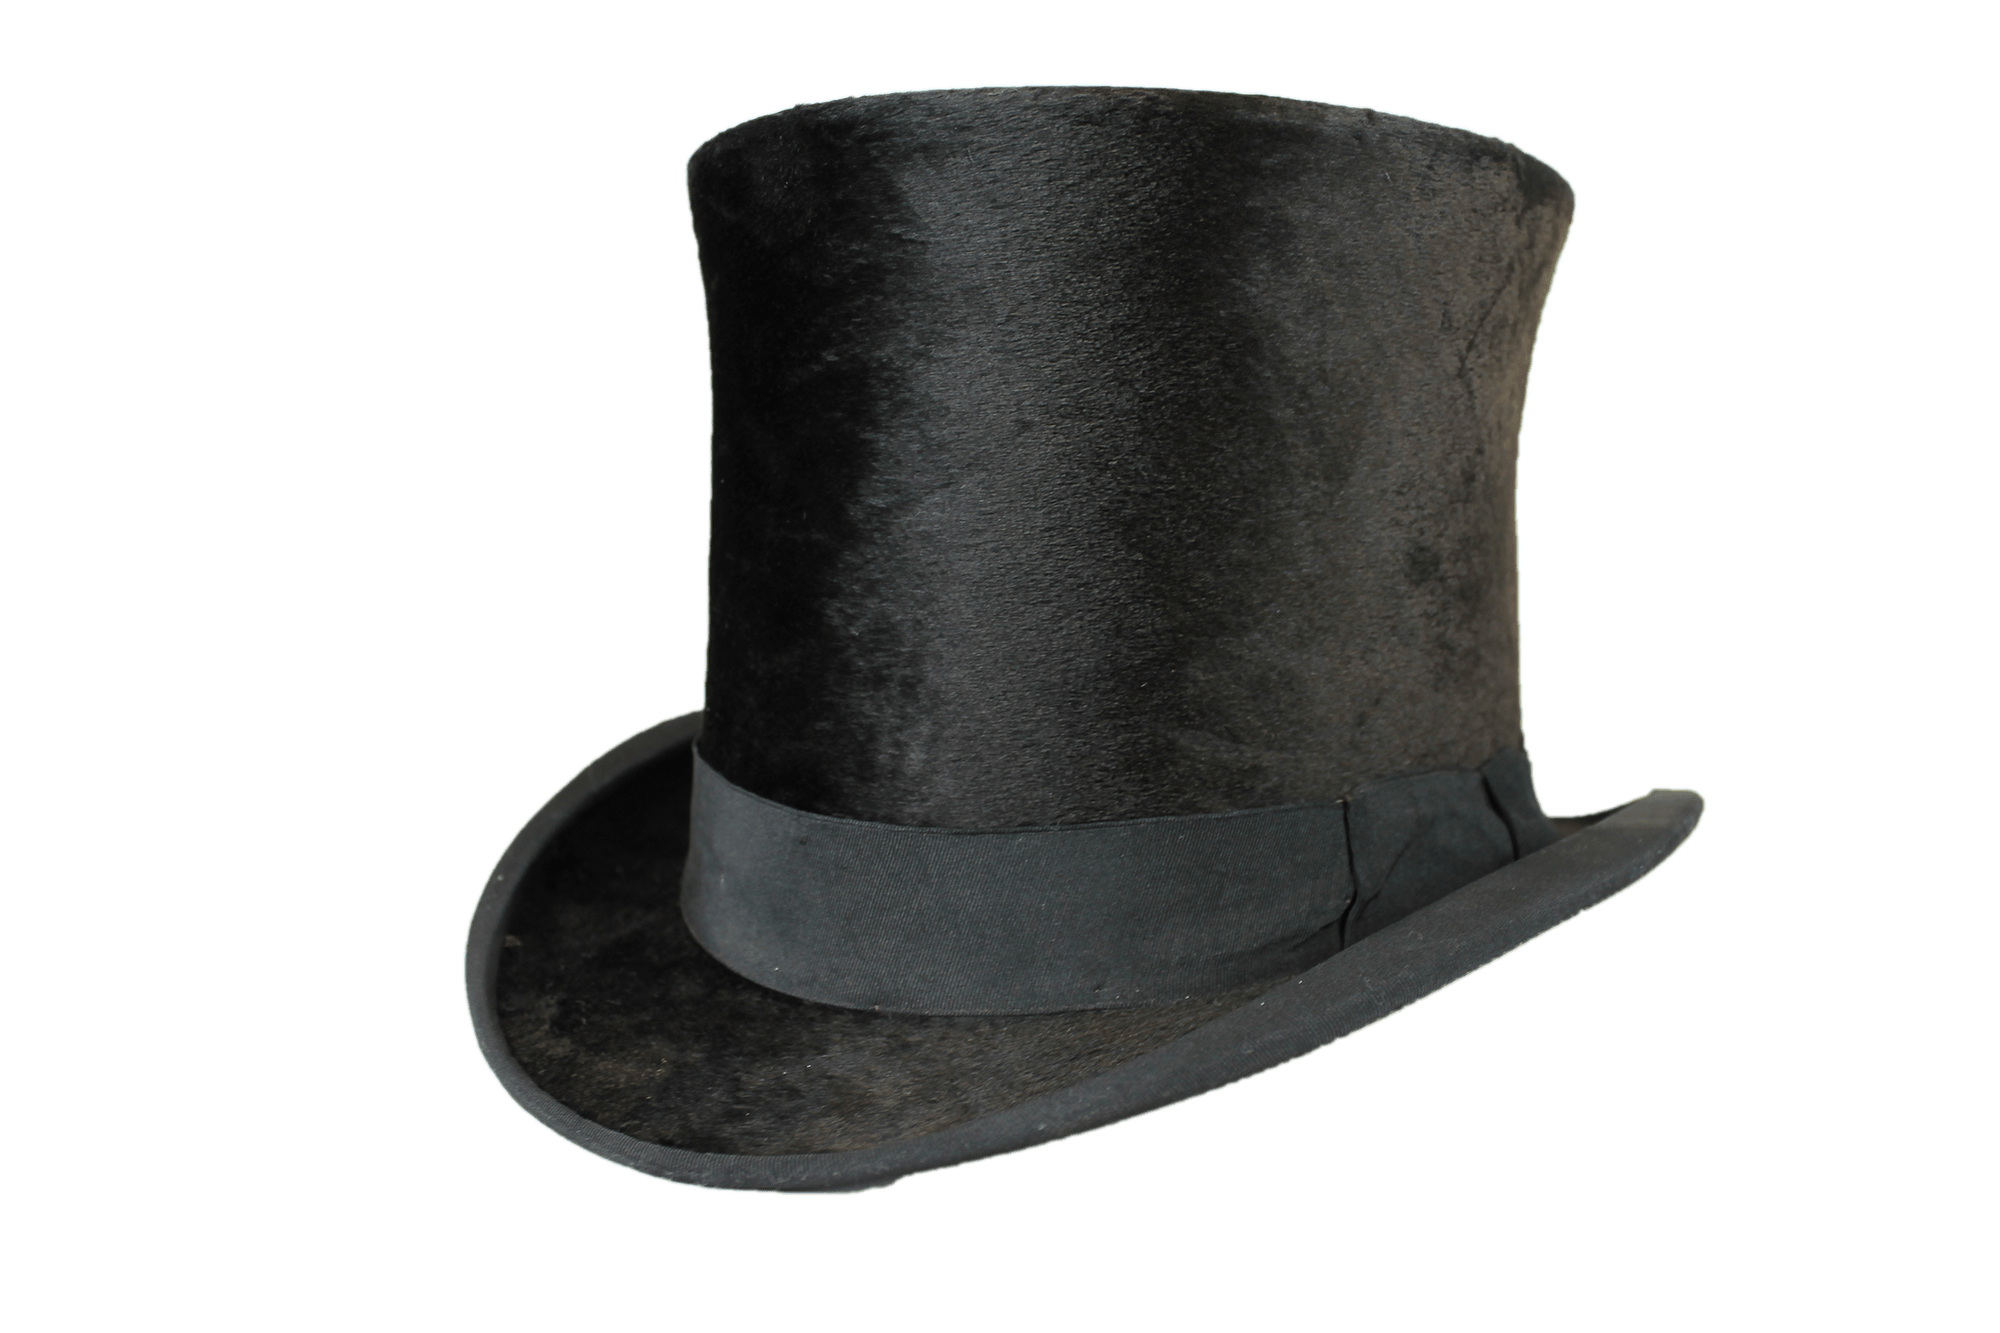 19th century top hat